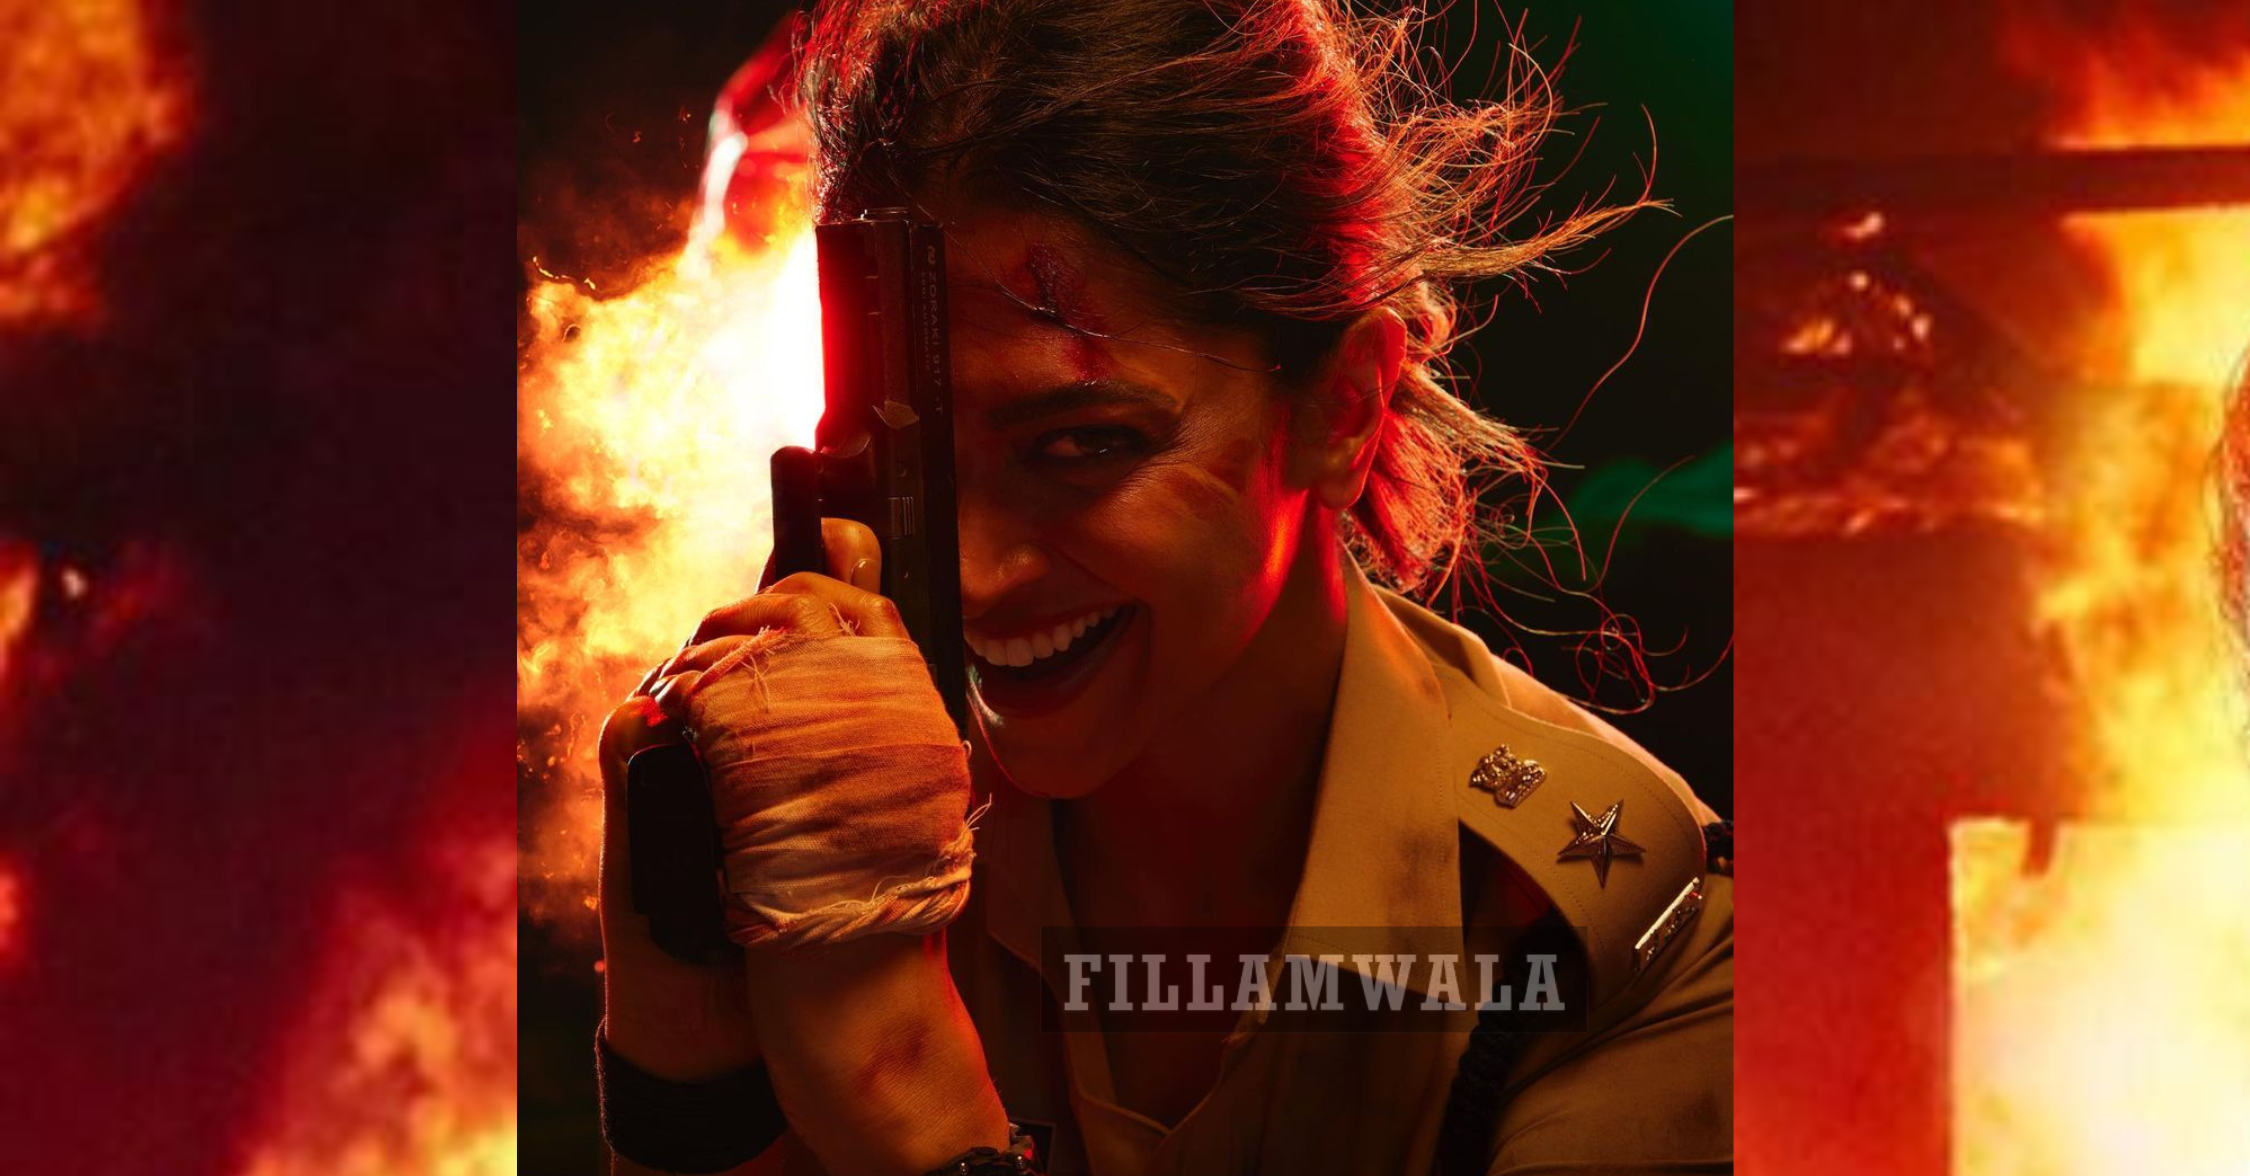 Deepika Padukone Joins Rohit Shetty's Cop Universe in 'Singham Again' as the Fearless Officer Shakti Shetty